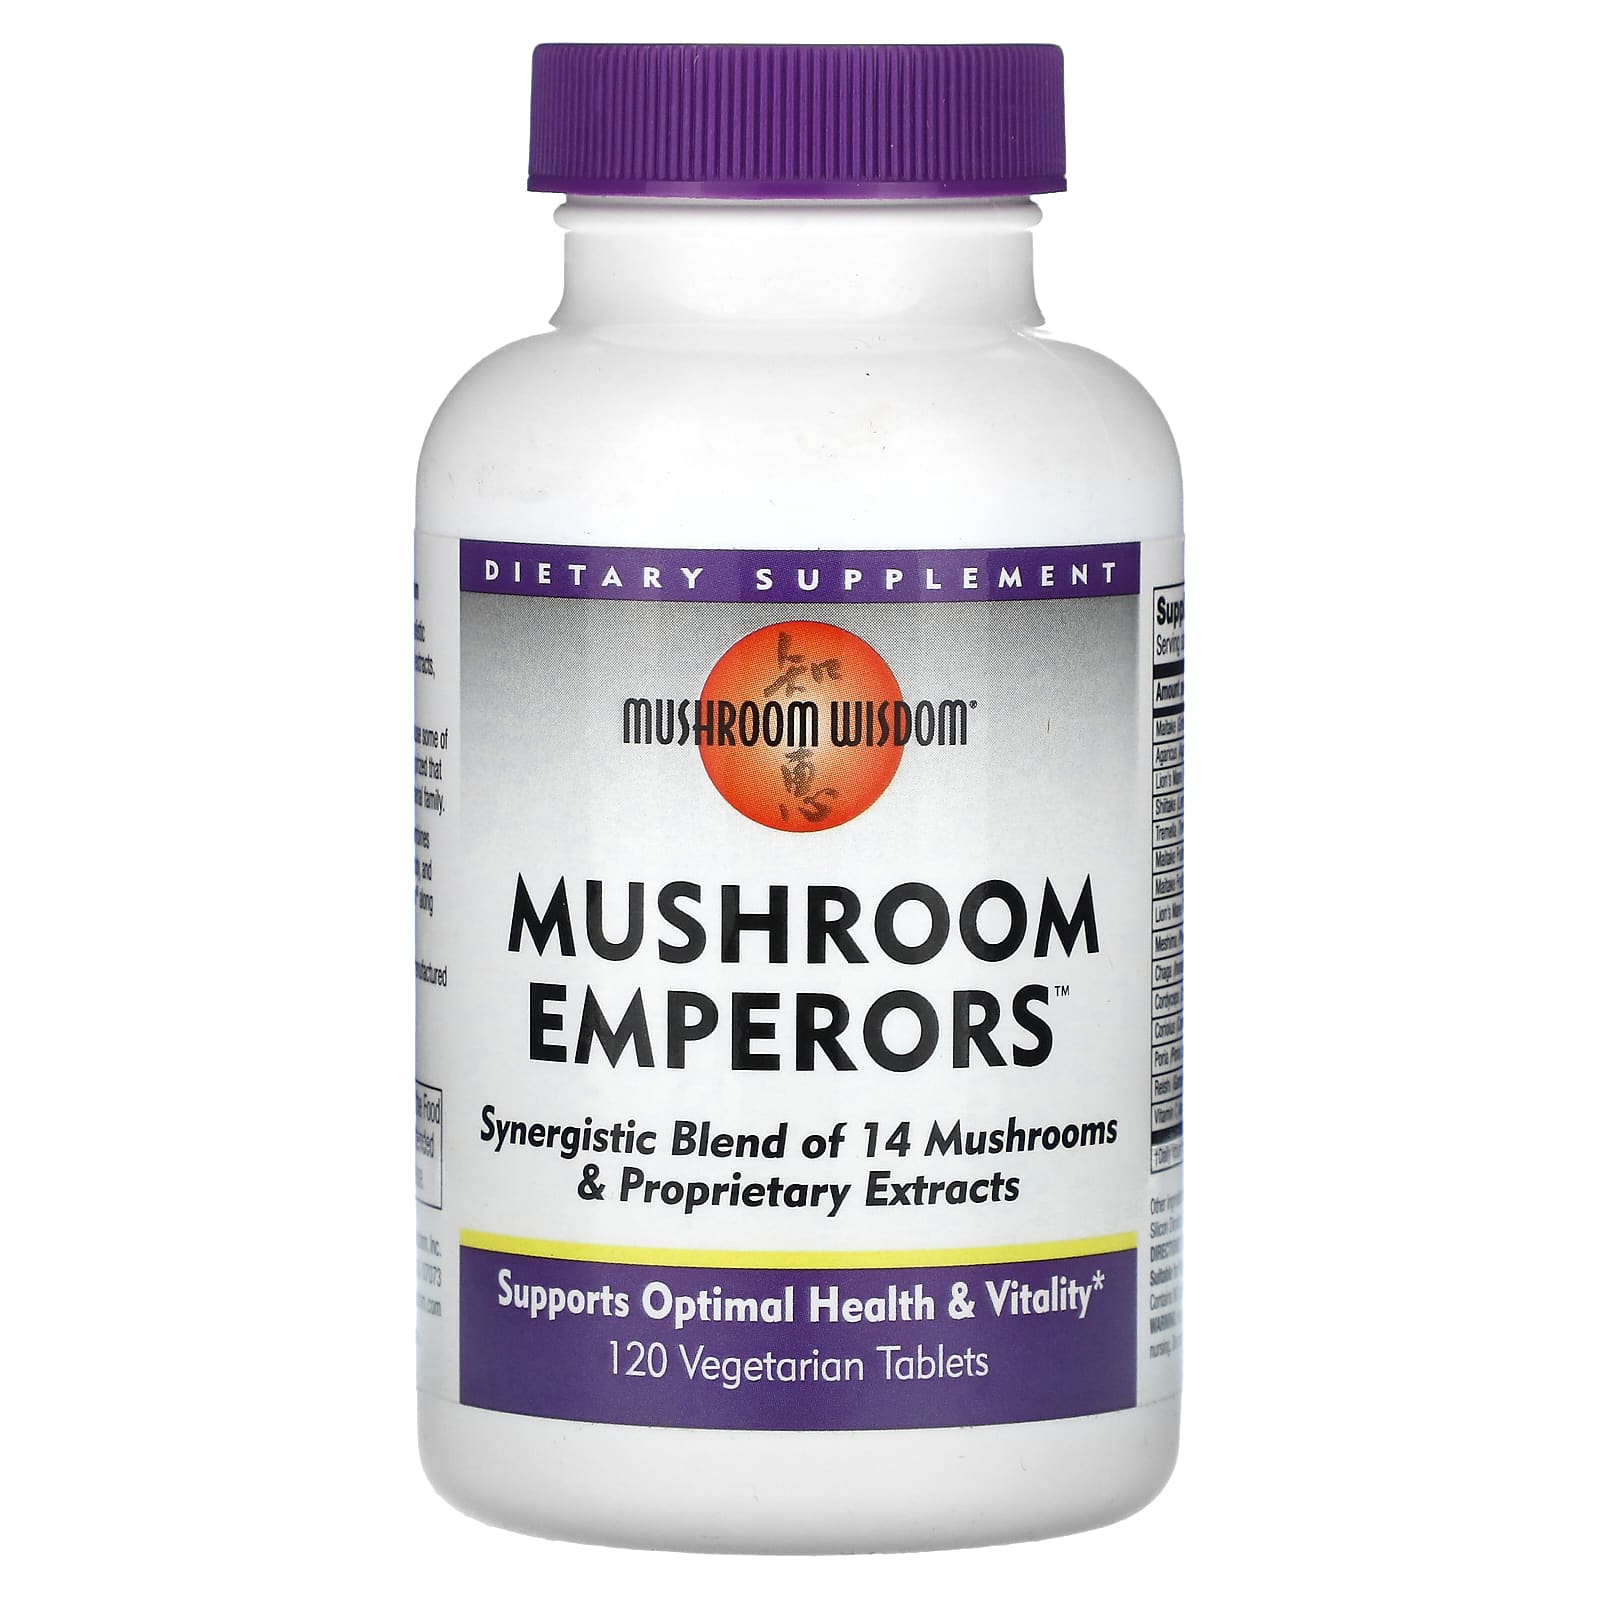 Mushroom Wisdom Грибные императоры 120 таблеток